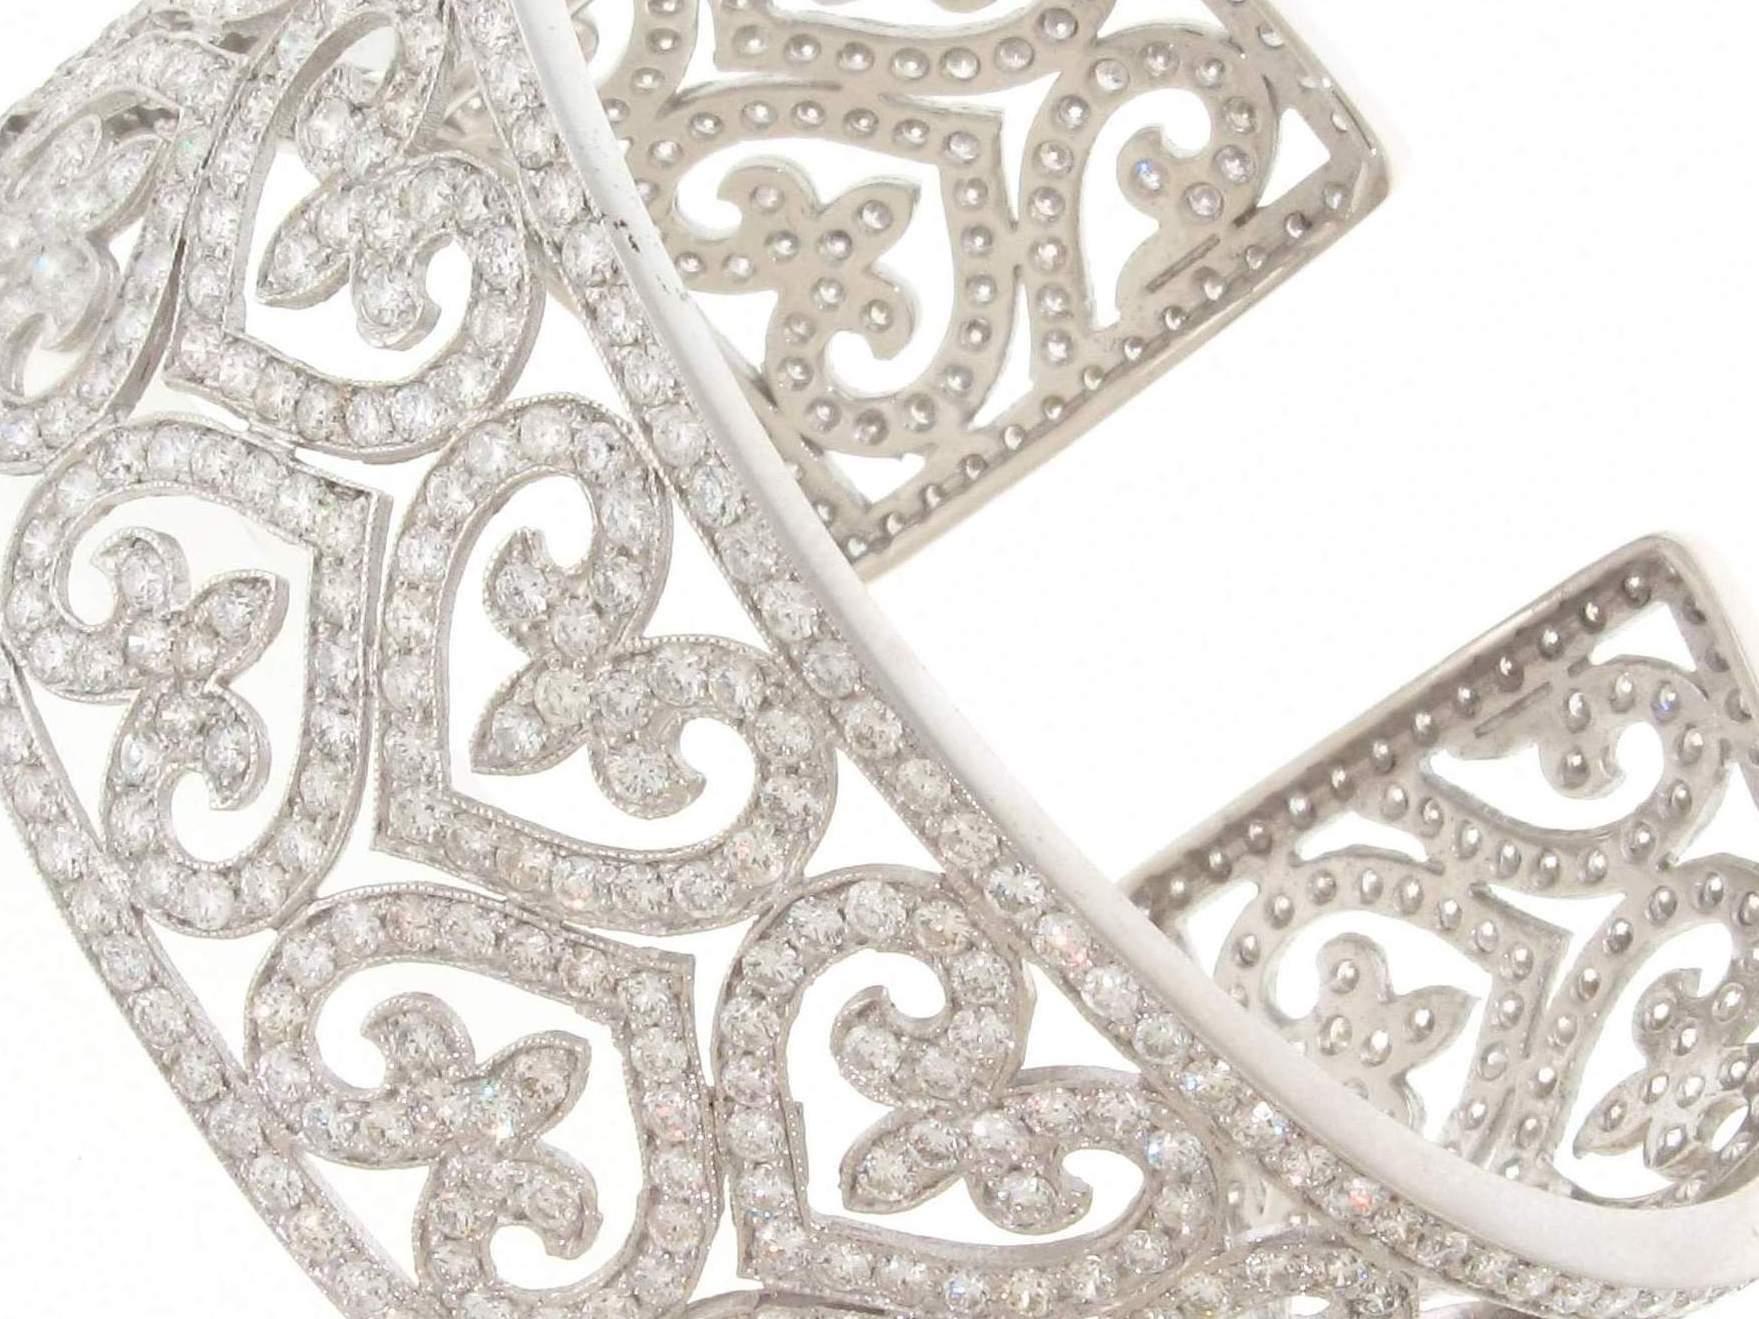 Designer cuff bracelet in 14K white gold with detail, pave set round diamonds in a heart design.  D6.55ct.t.w.